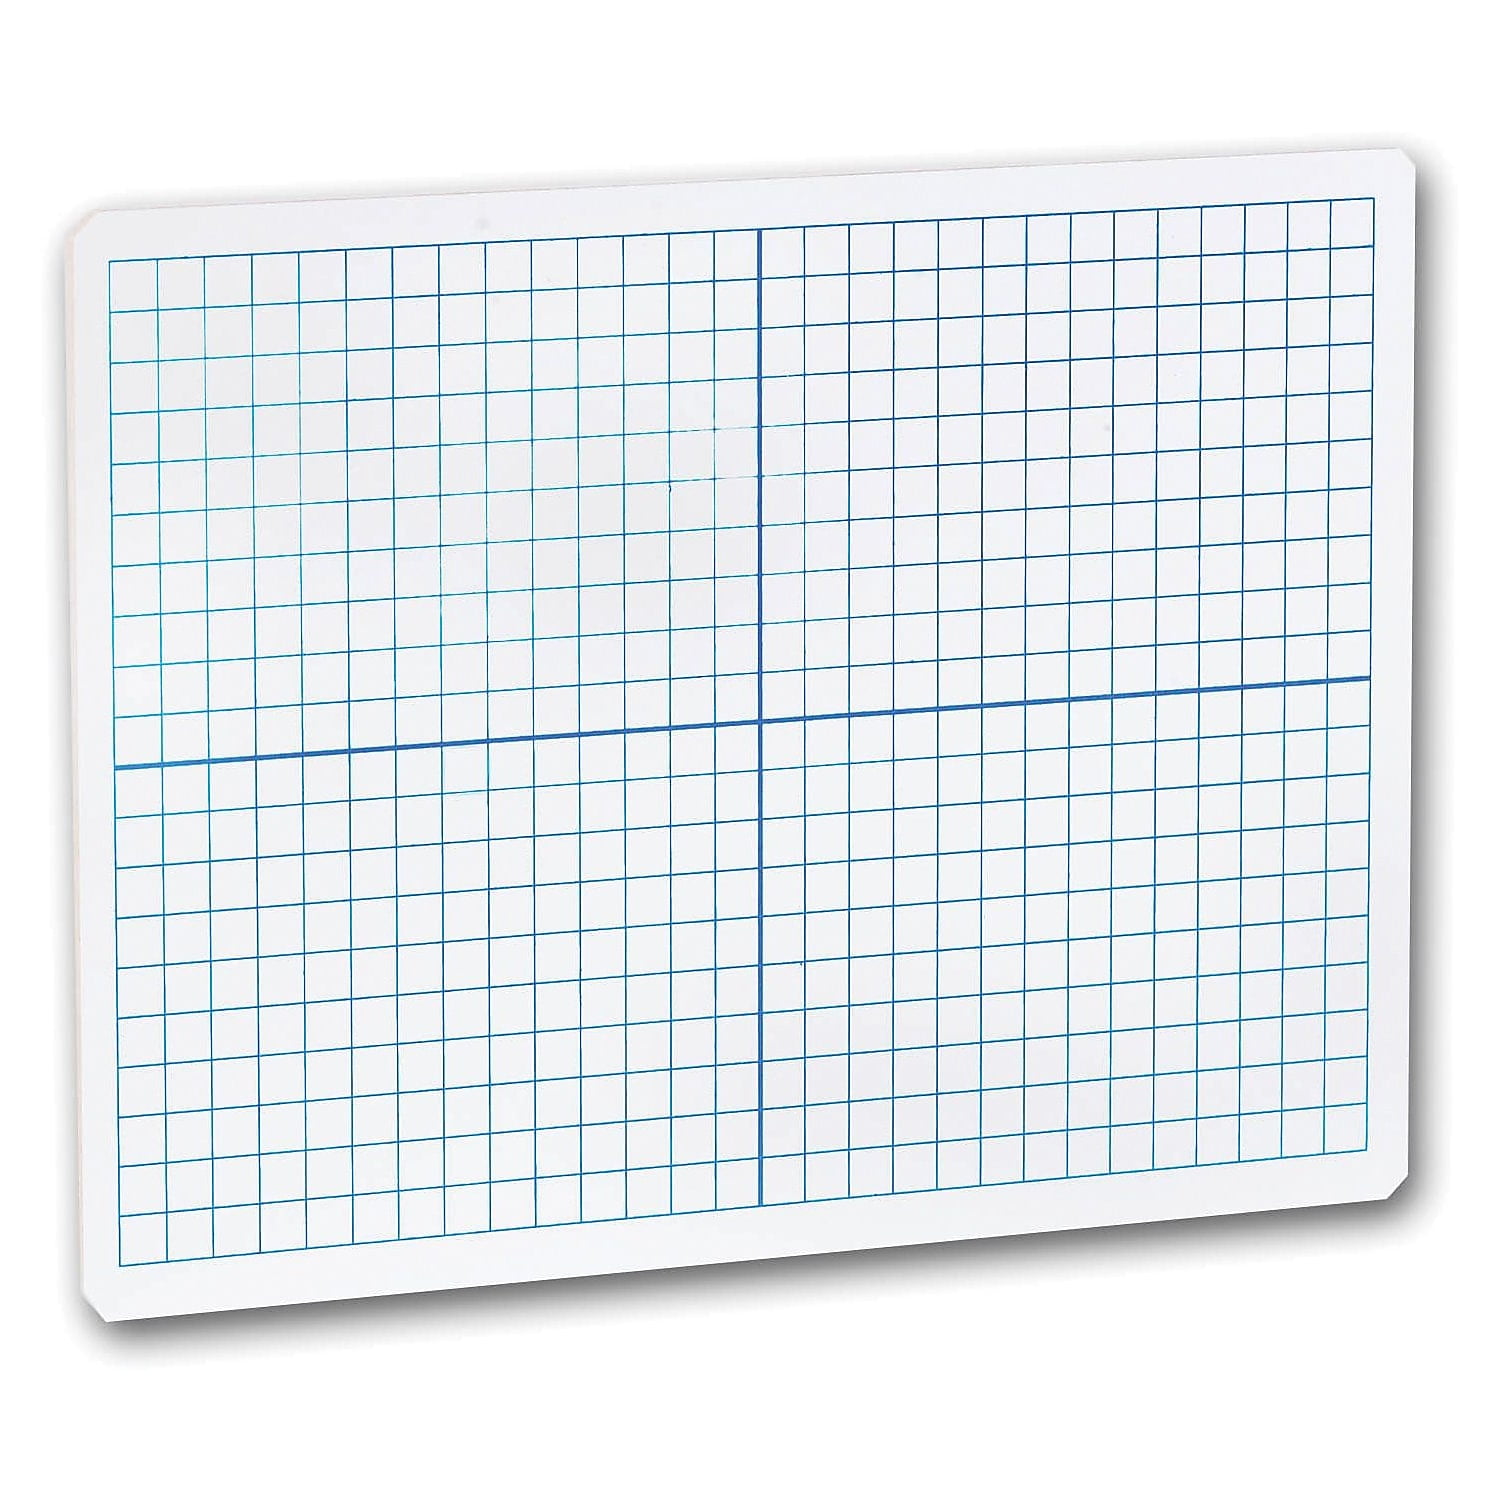 2-Sided Math Whiteboards, XY Axis/Plain - PACAC900810, Dixon Ticonderoga  Co - Pacon